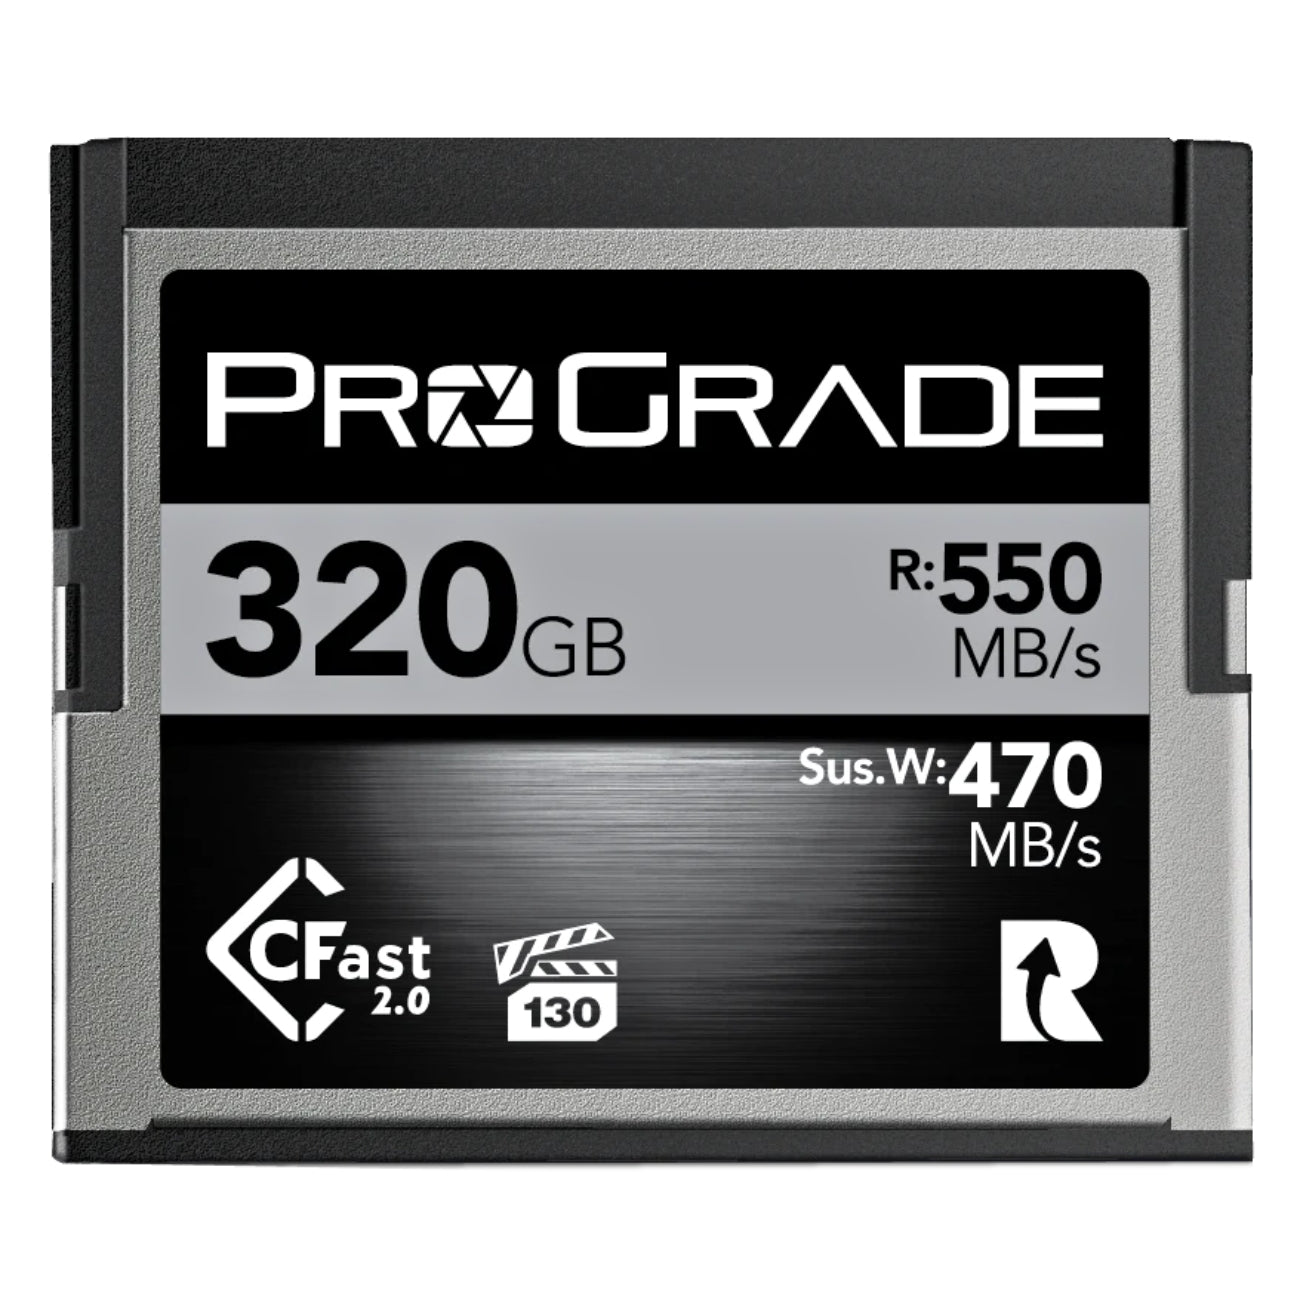 ProGrade Digital CFast 2.0 Cobalt Memory Card (320GBGB) - digital camera memory card / memory card for mobile phone